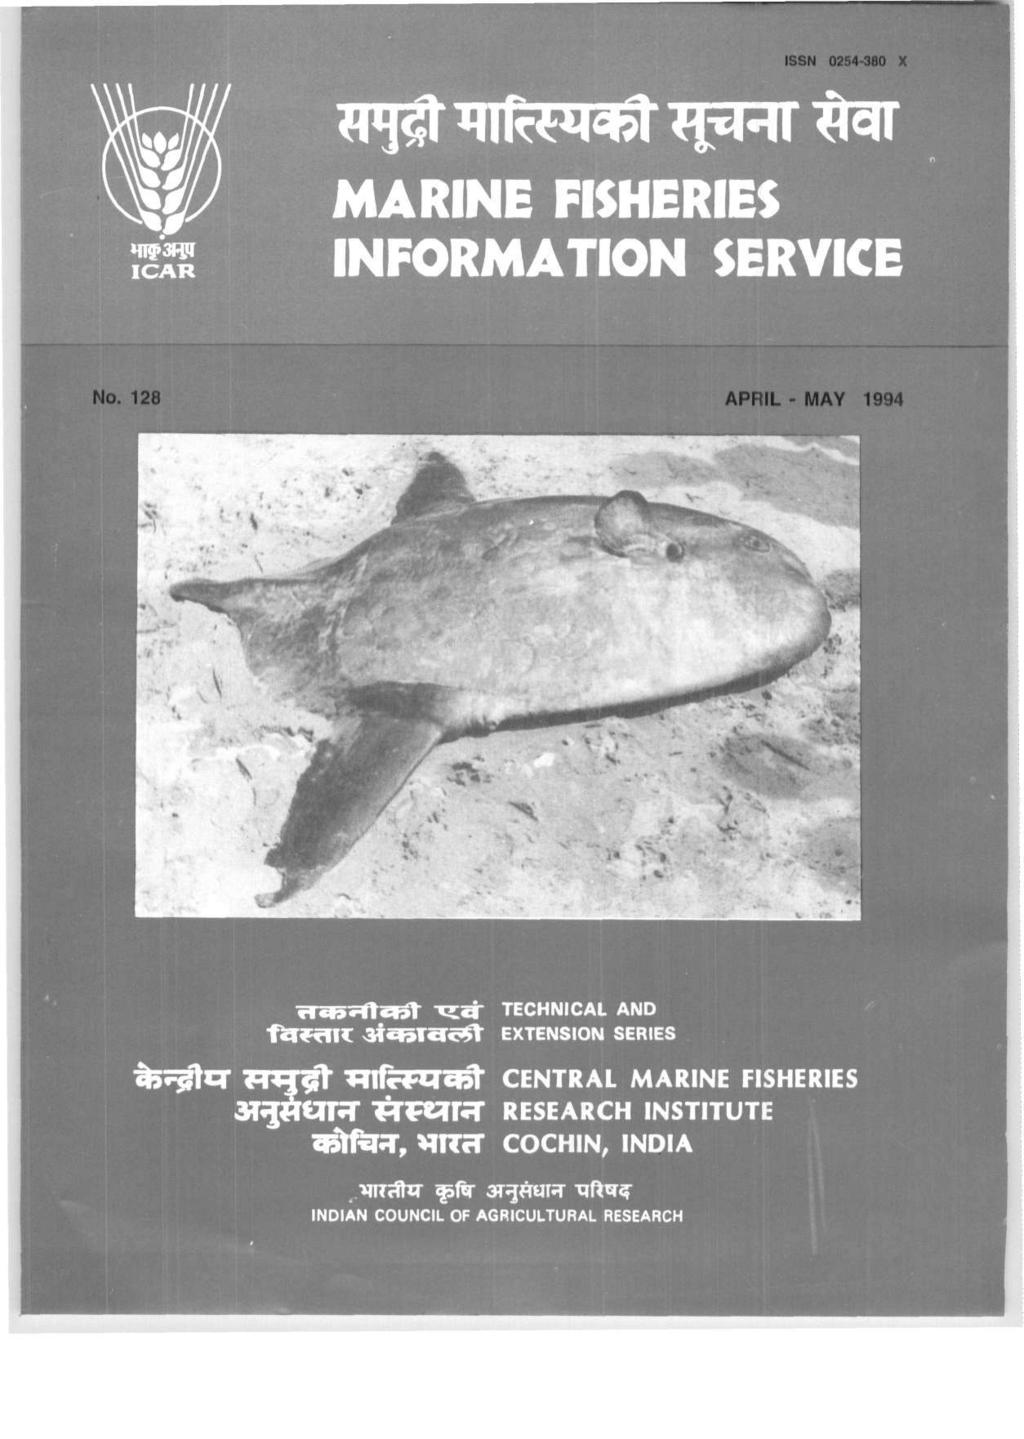 ISSN 0254-380 X H1$3Rff ICAR MARINE FISHERIES INFORMATION SERVICE No.